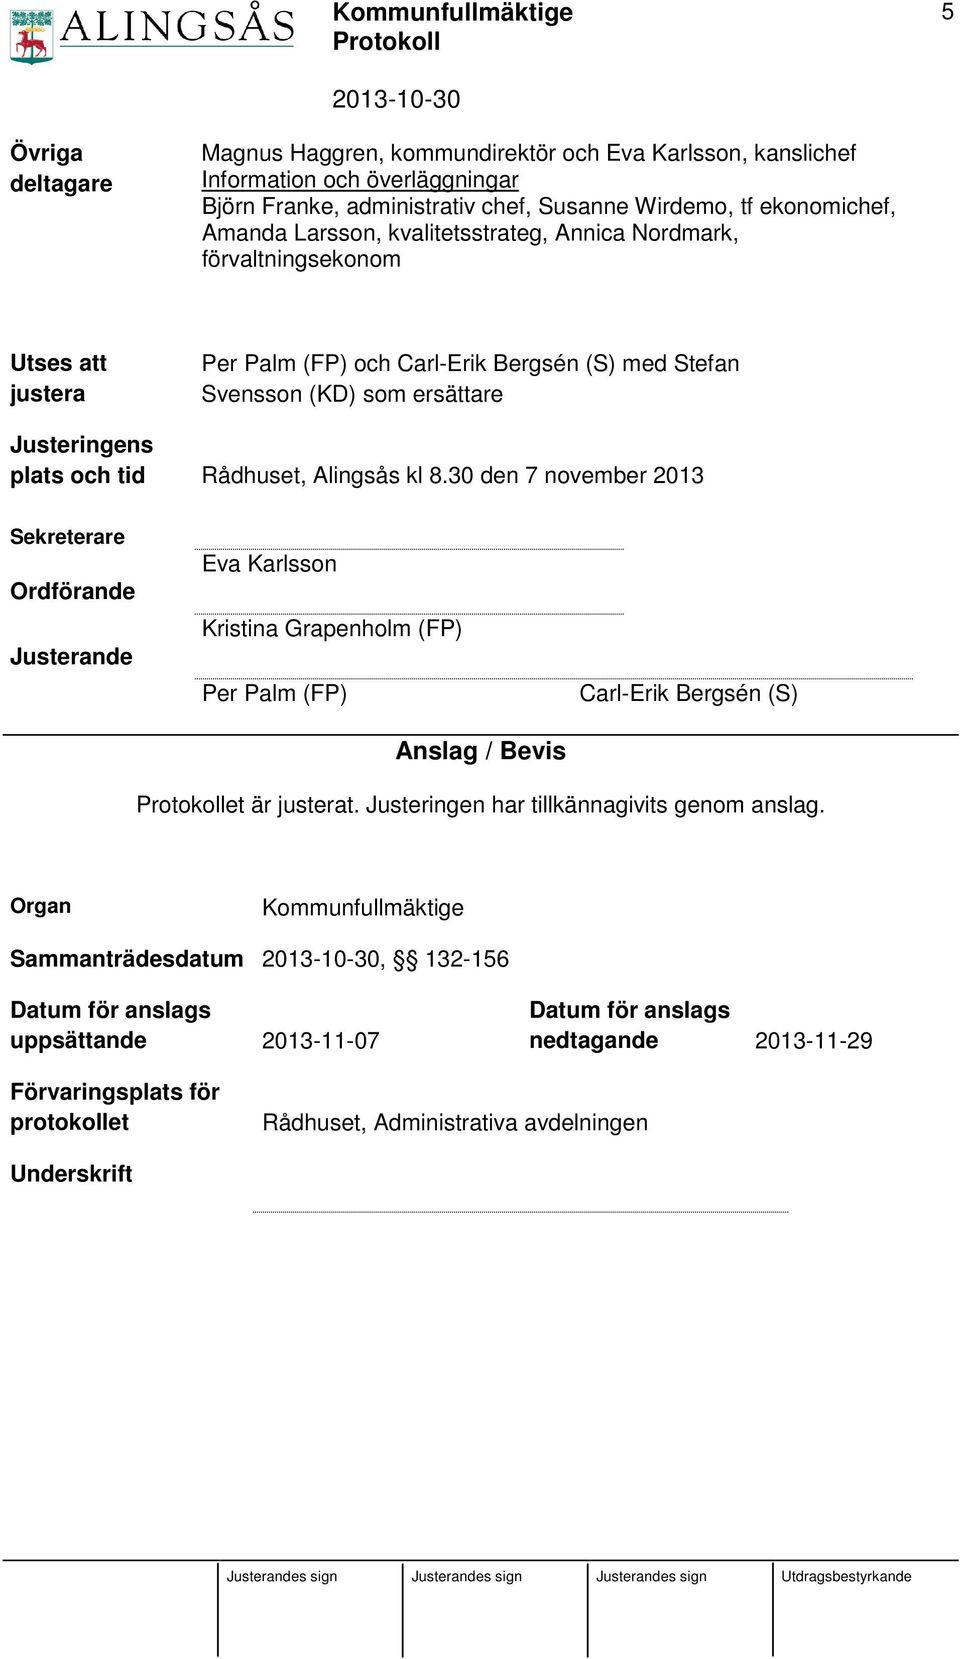 8.30 den 7 november 2013 Sekreterare Ordförande Justerande Eva Karlsson Kristina Grapenholm (FP) Per Palm (FP) Anslag / Bevis Carl-Erik Bergsén (S) et är justerat.